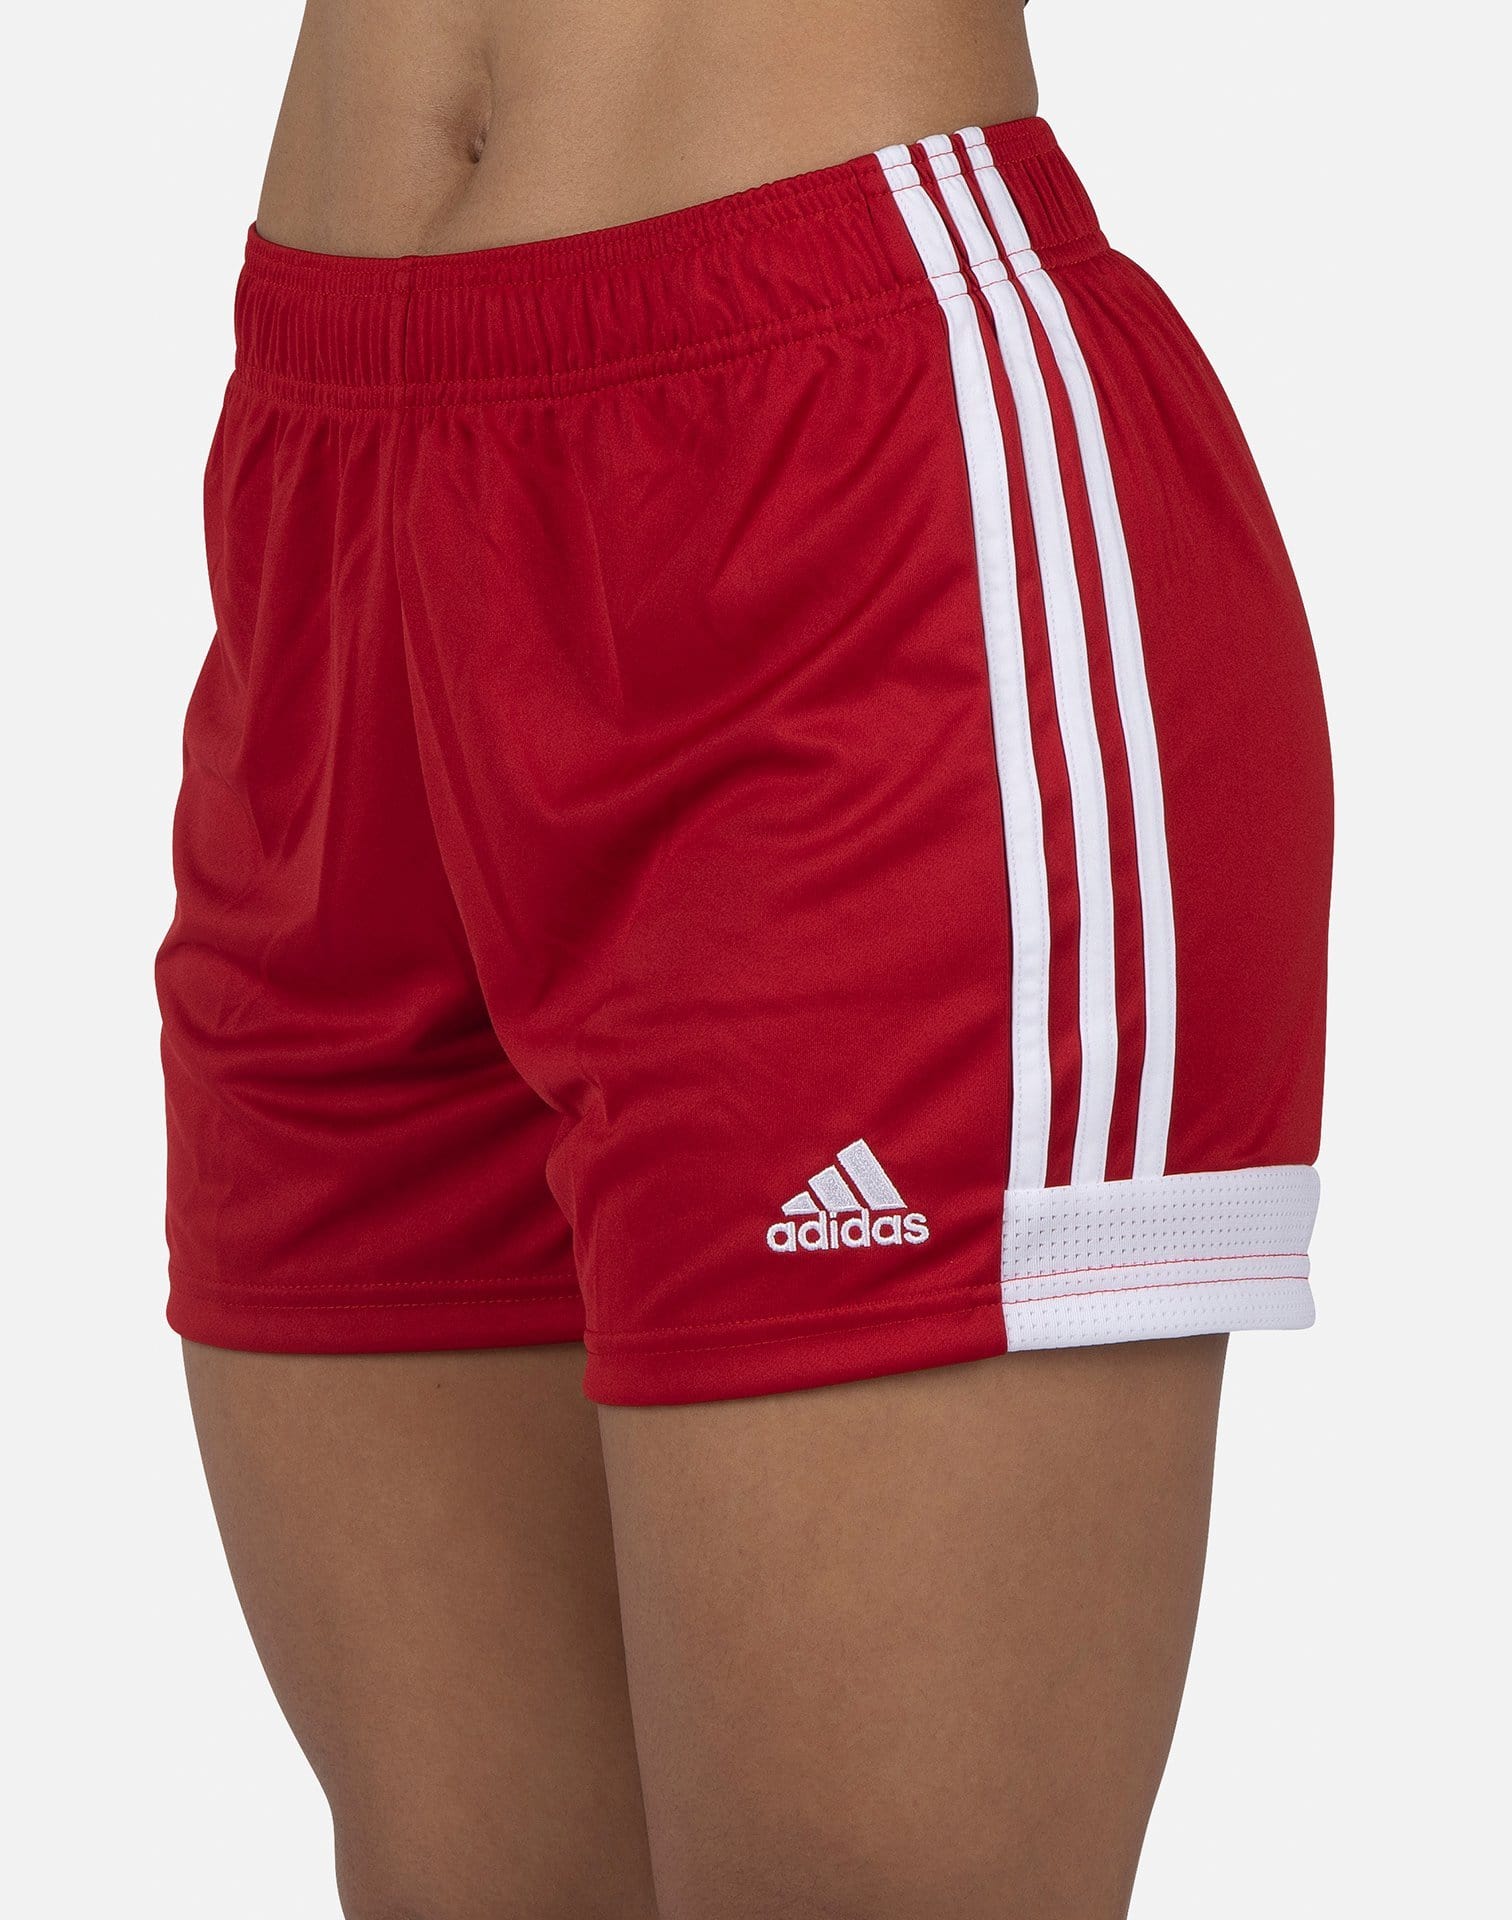 women's tastigo 19 soccer shorts